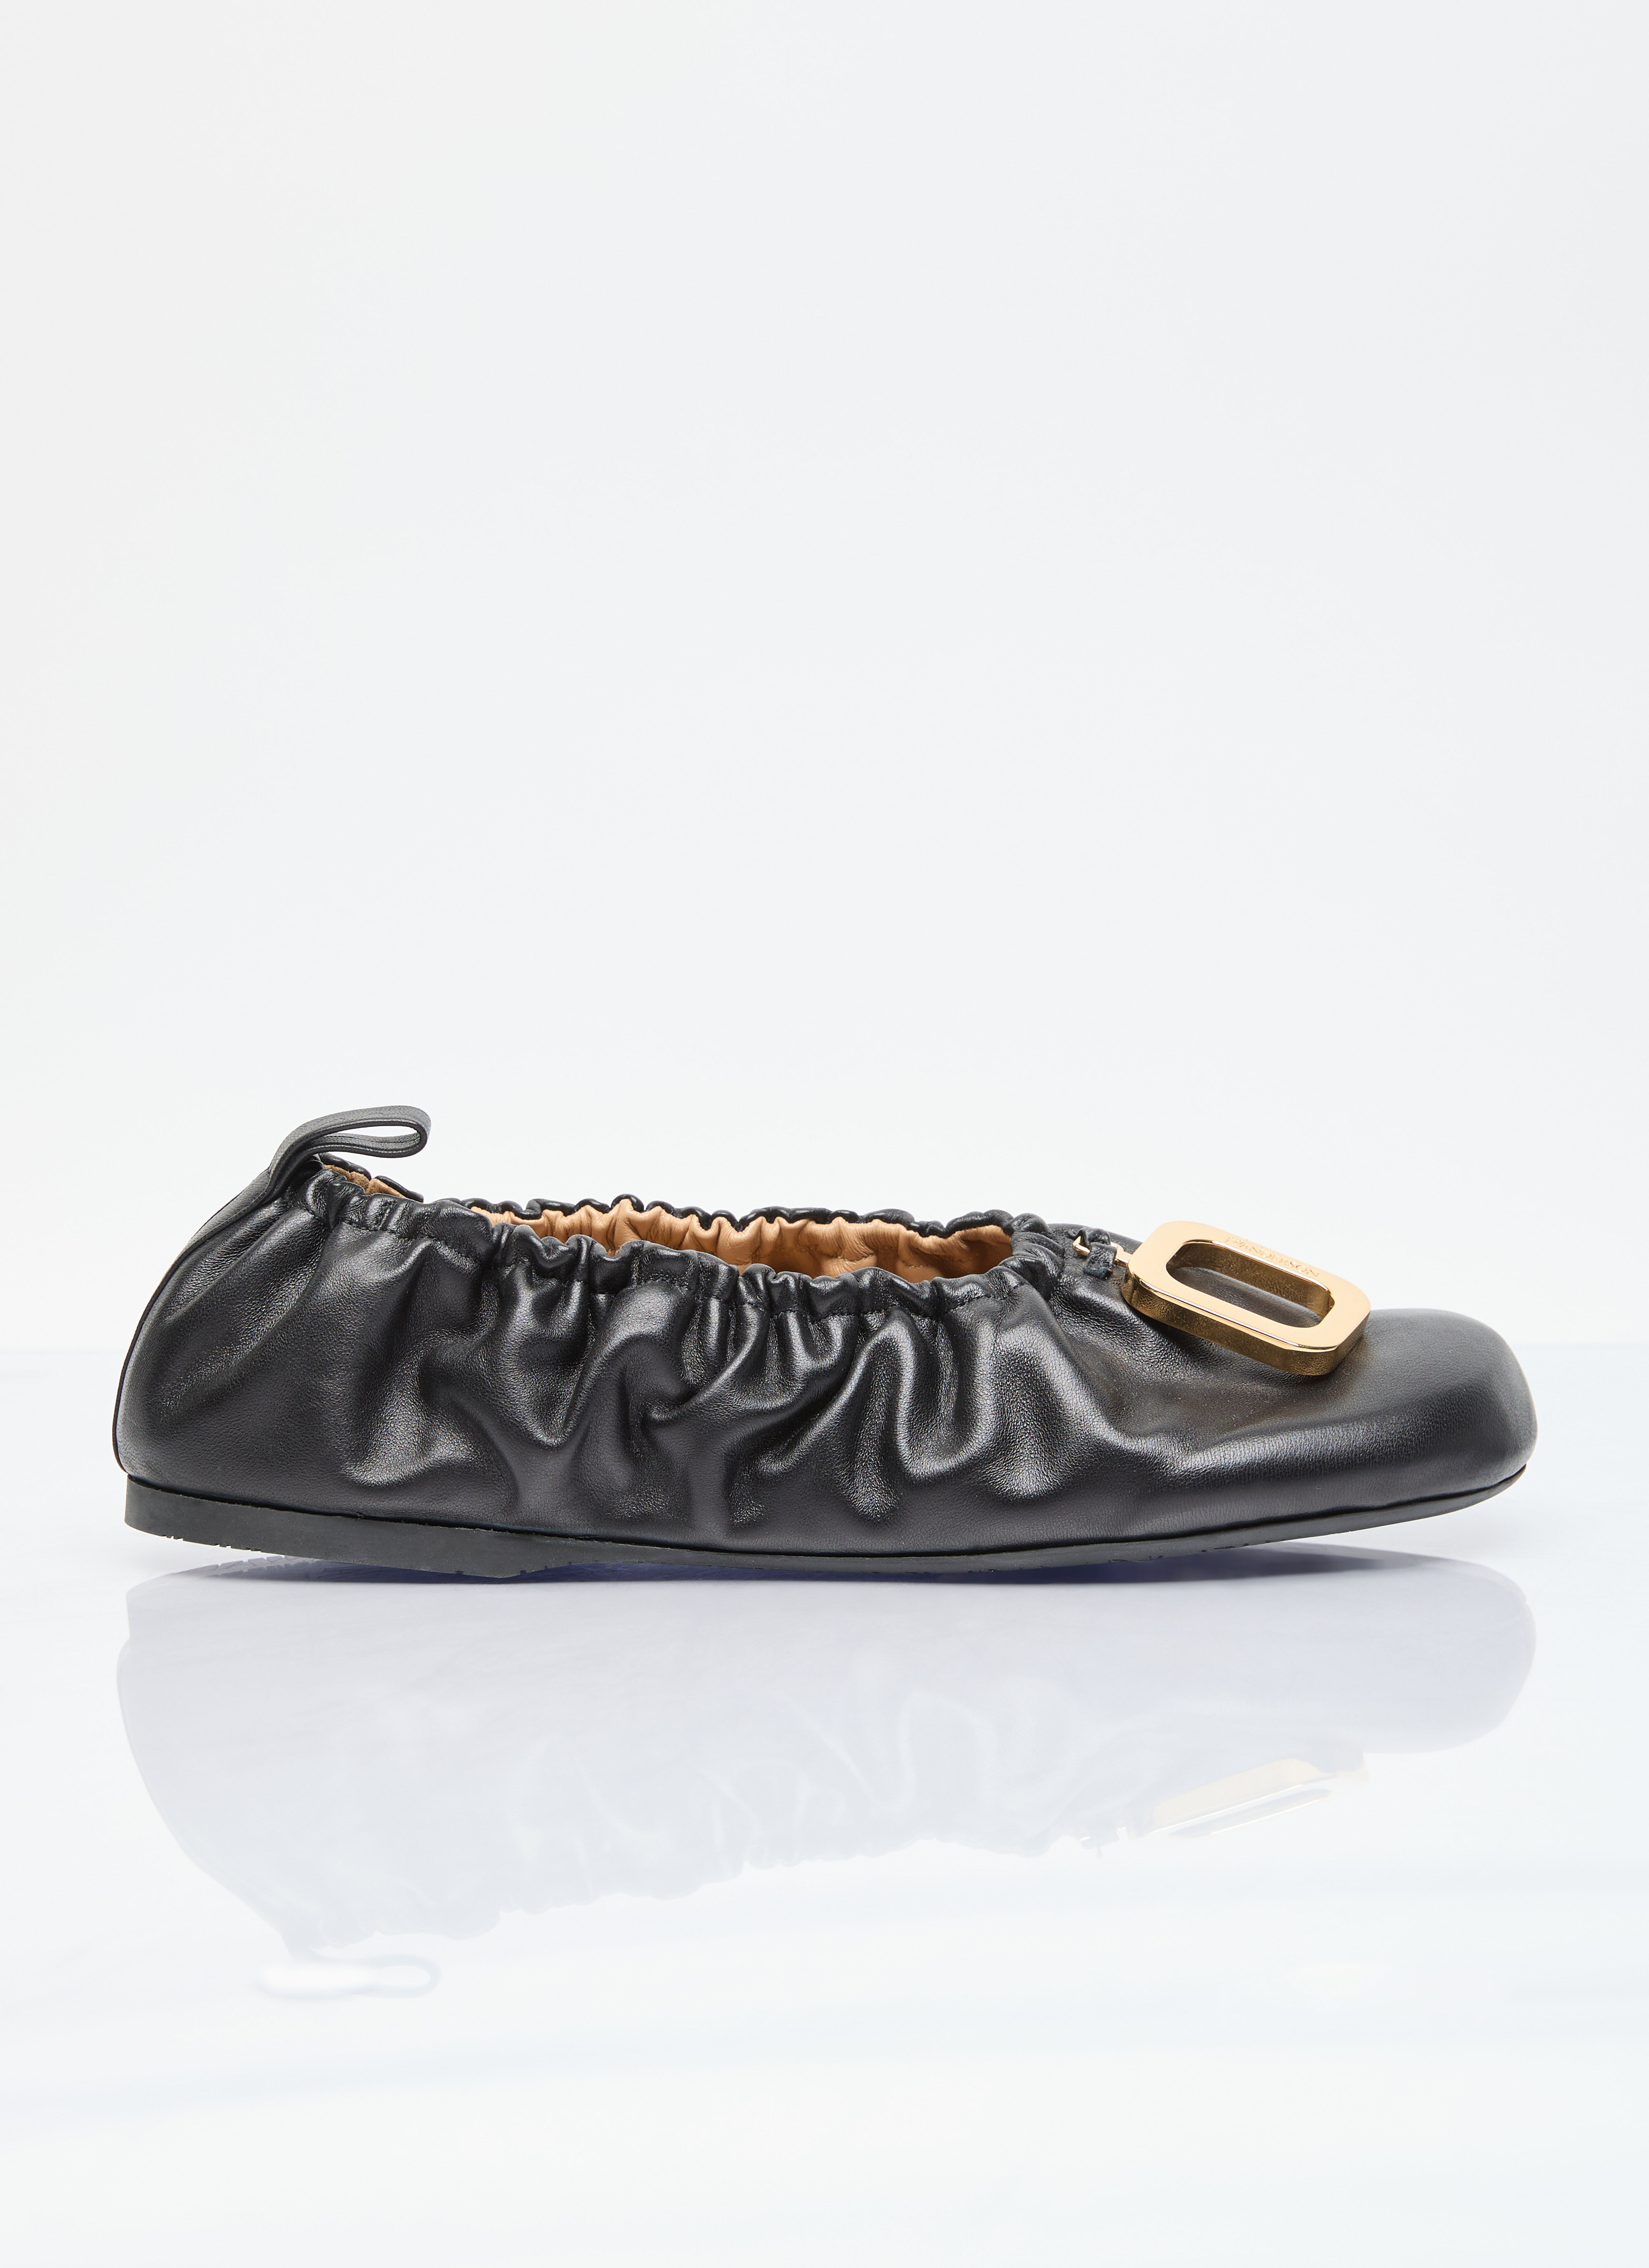 Alexander Wang Puller Leather Ballet Flats Black awg0255043